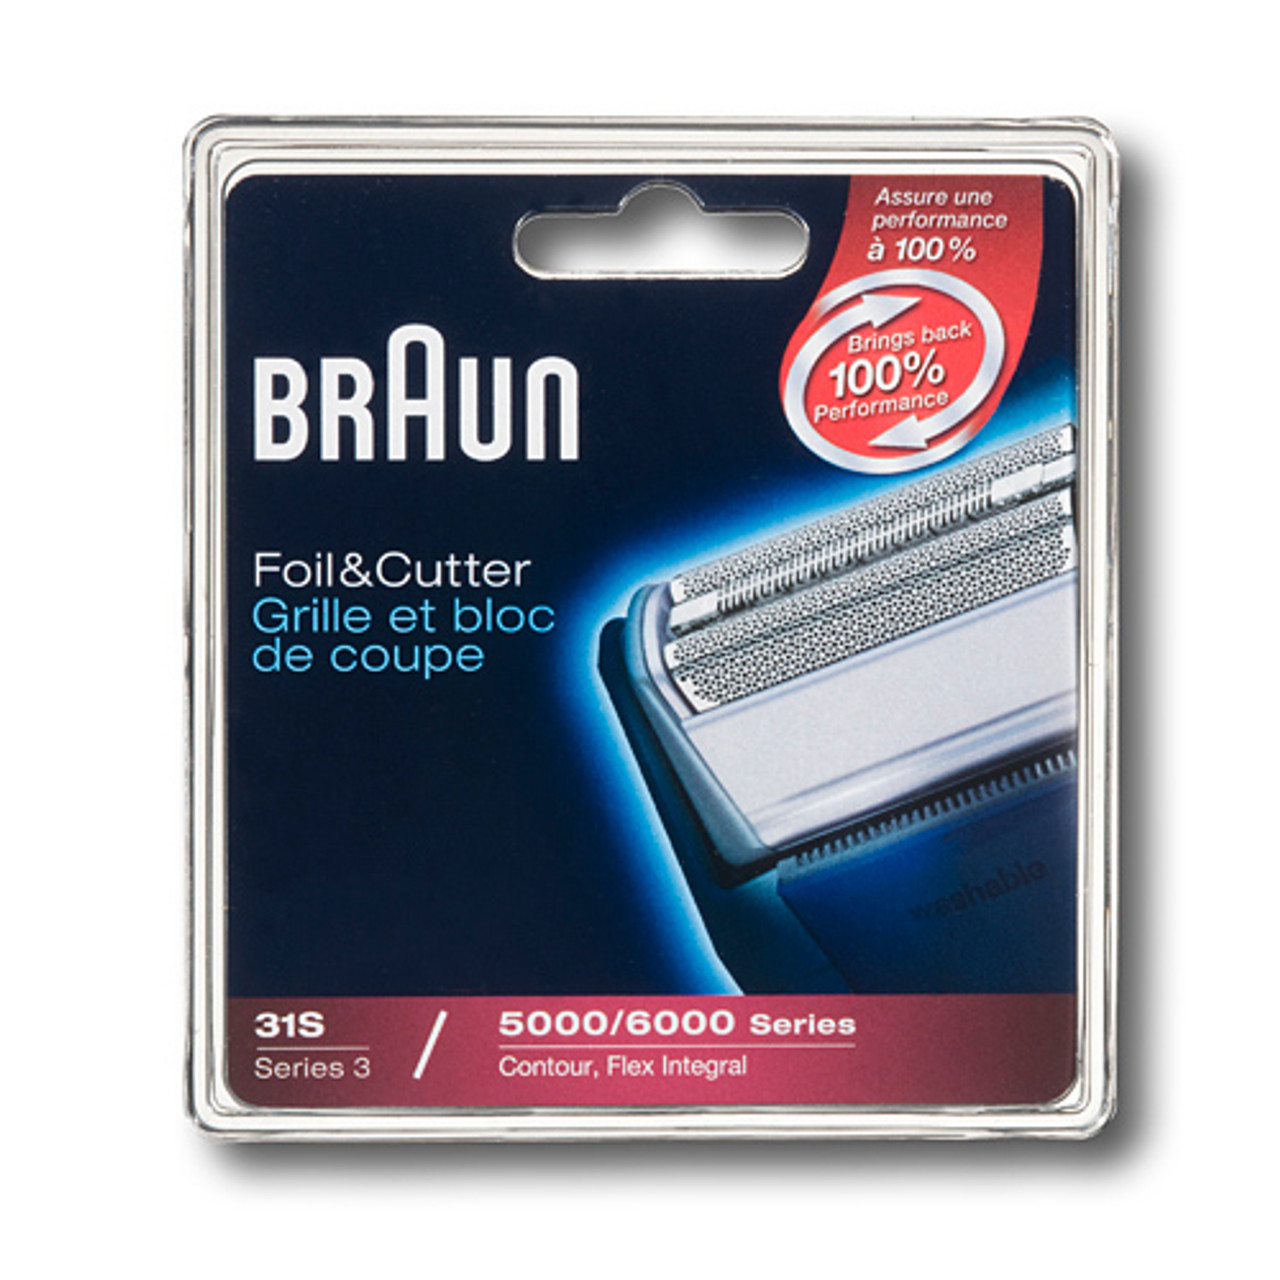 Buy Braun Replacement Blades, Foils, 6000 Series